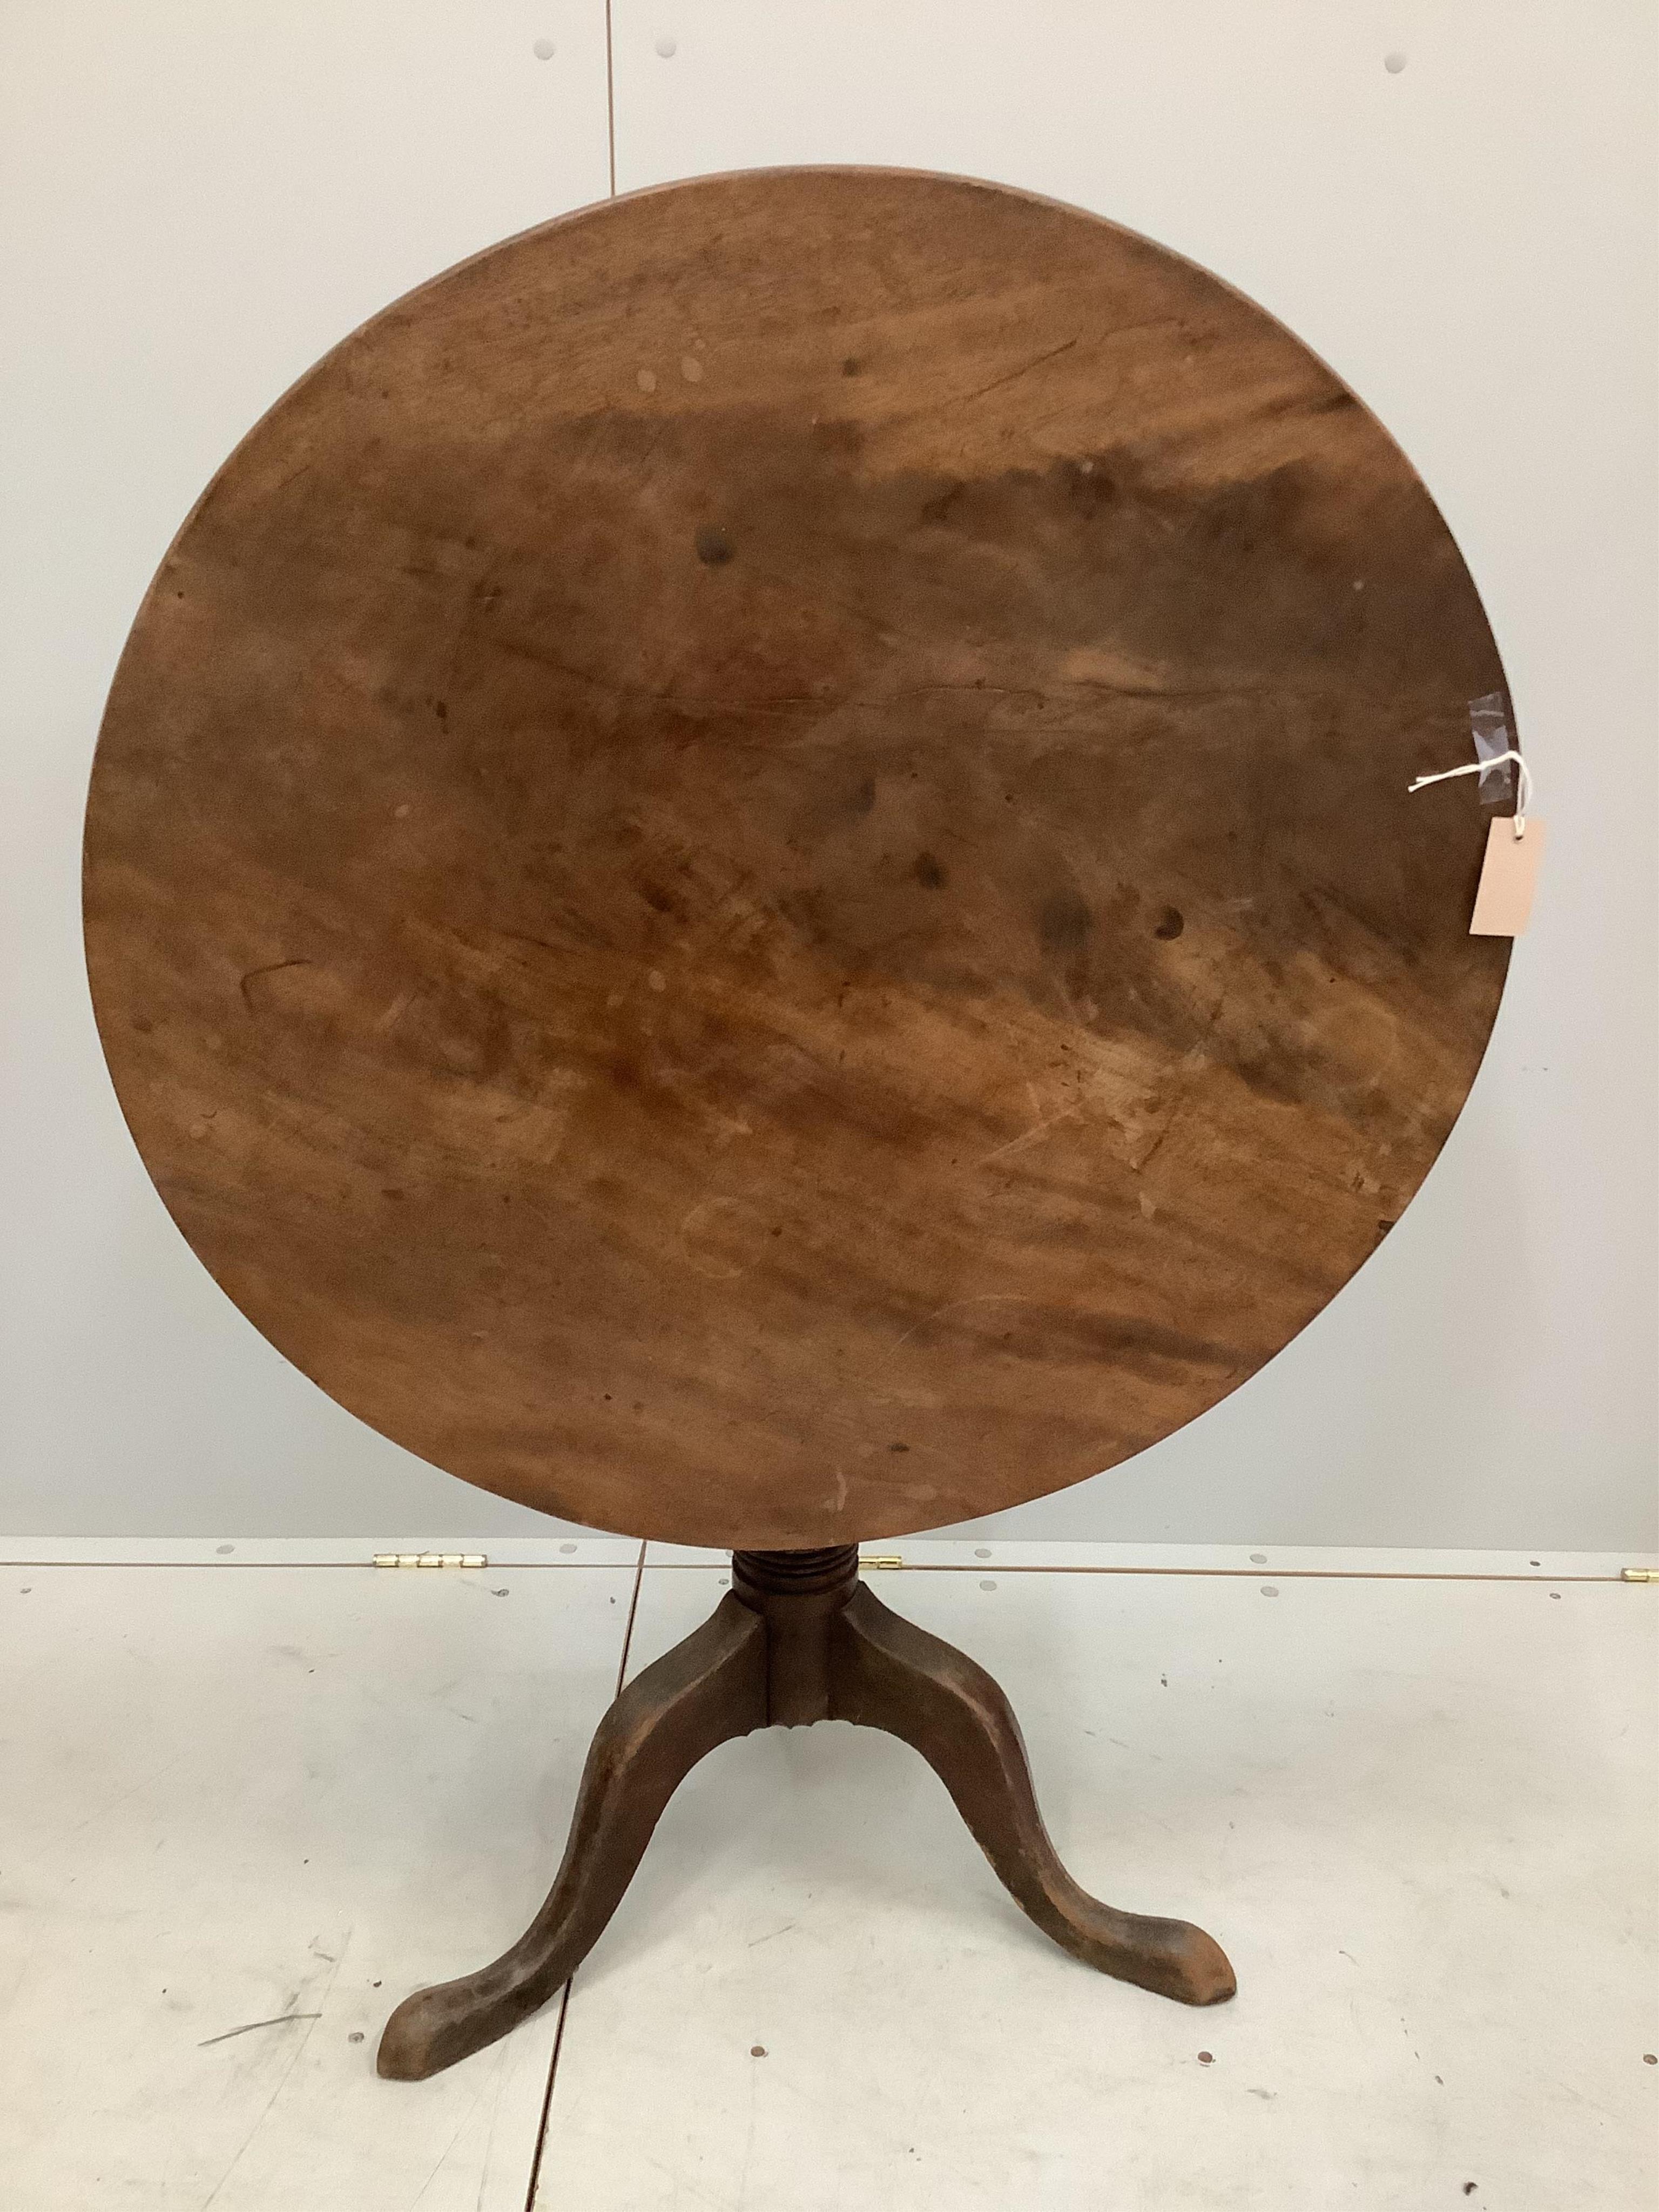 An early 19th century circular mahogany tilt top tripod tea table, diameter 84cm, height 72cm